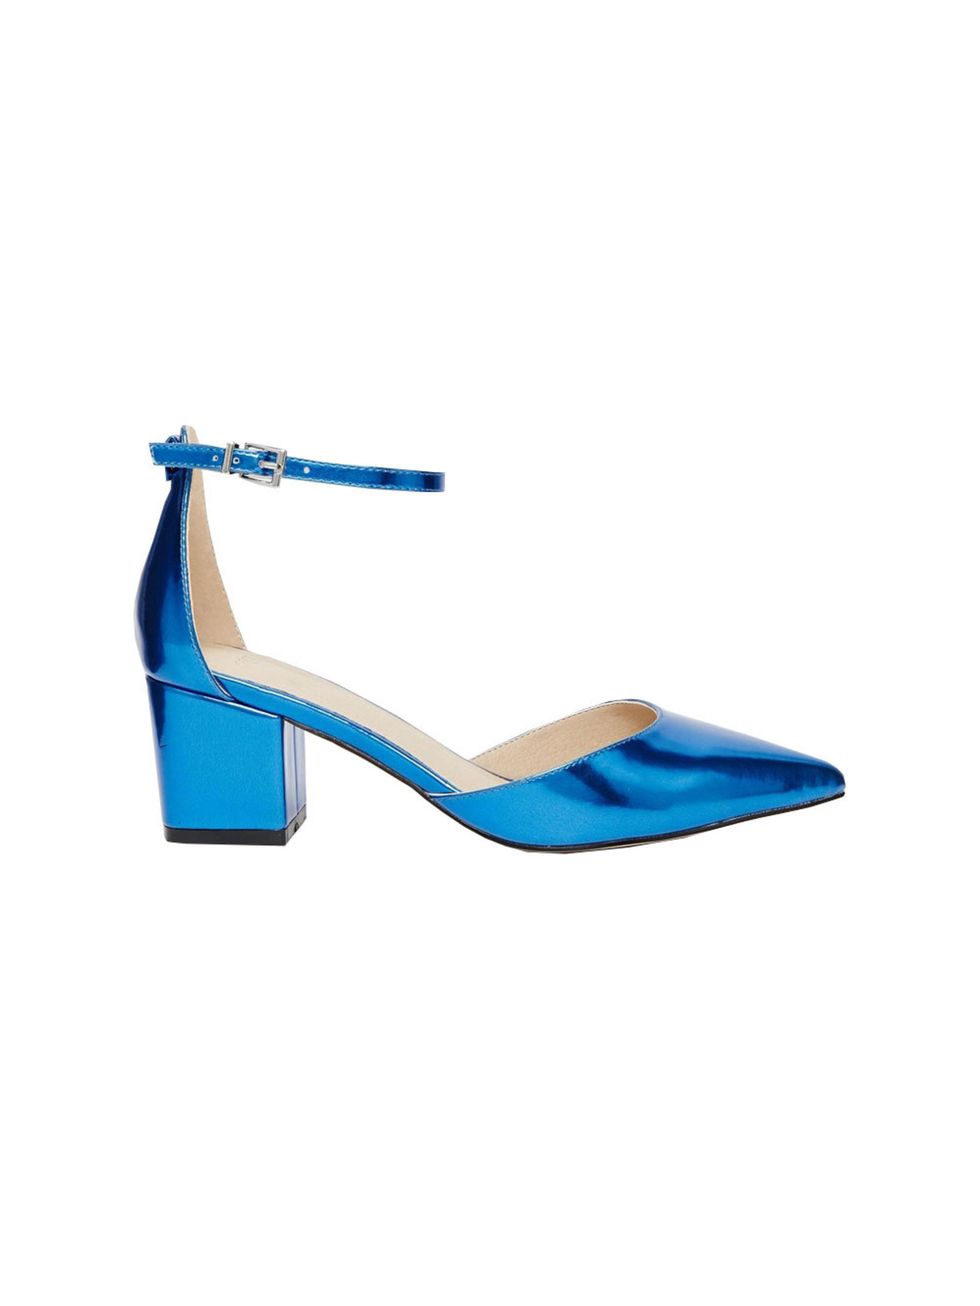 Aqua, Teal, Electric blue, Azure, Sandal, Turquoise, High heels, Tan, Basic pump, Slingback, 